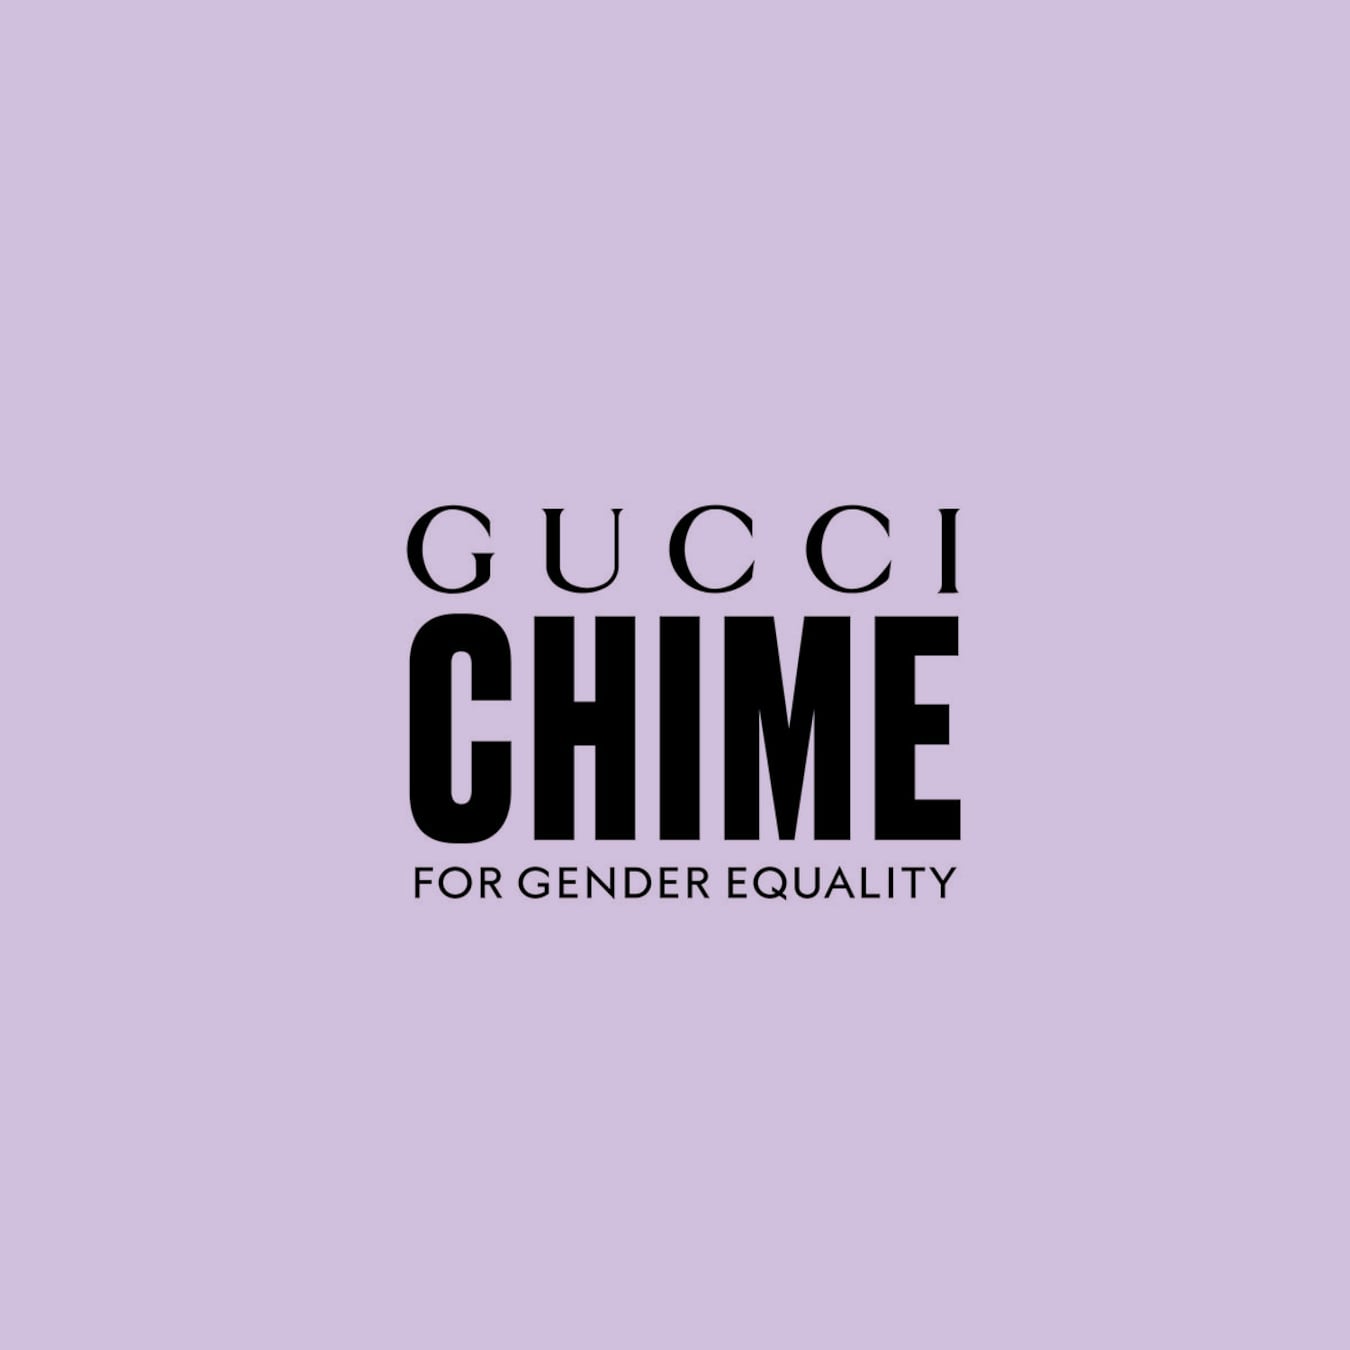 Project-Gucci CHIME